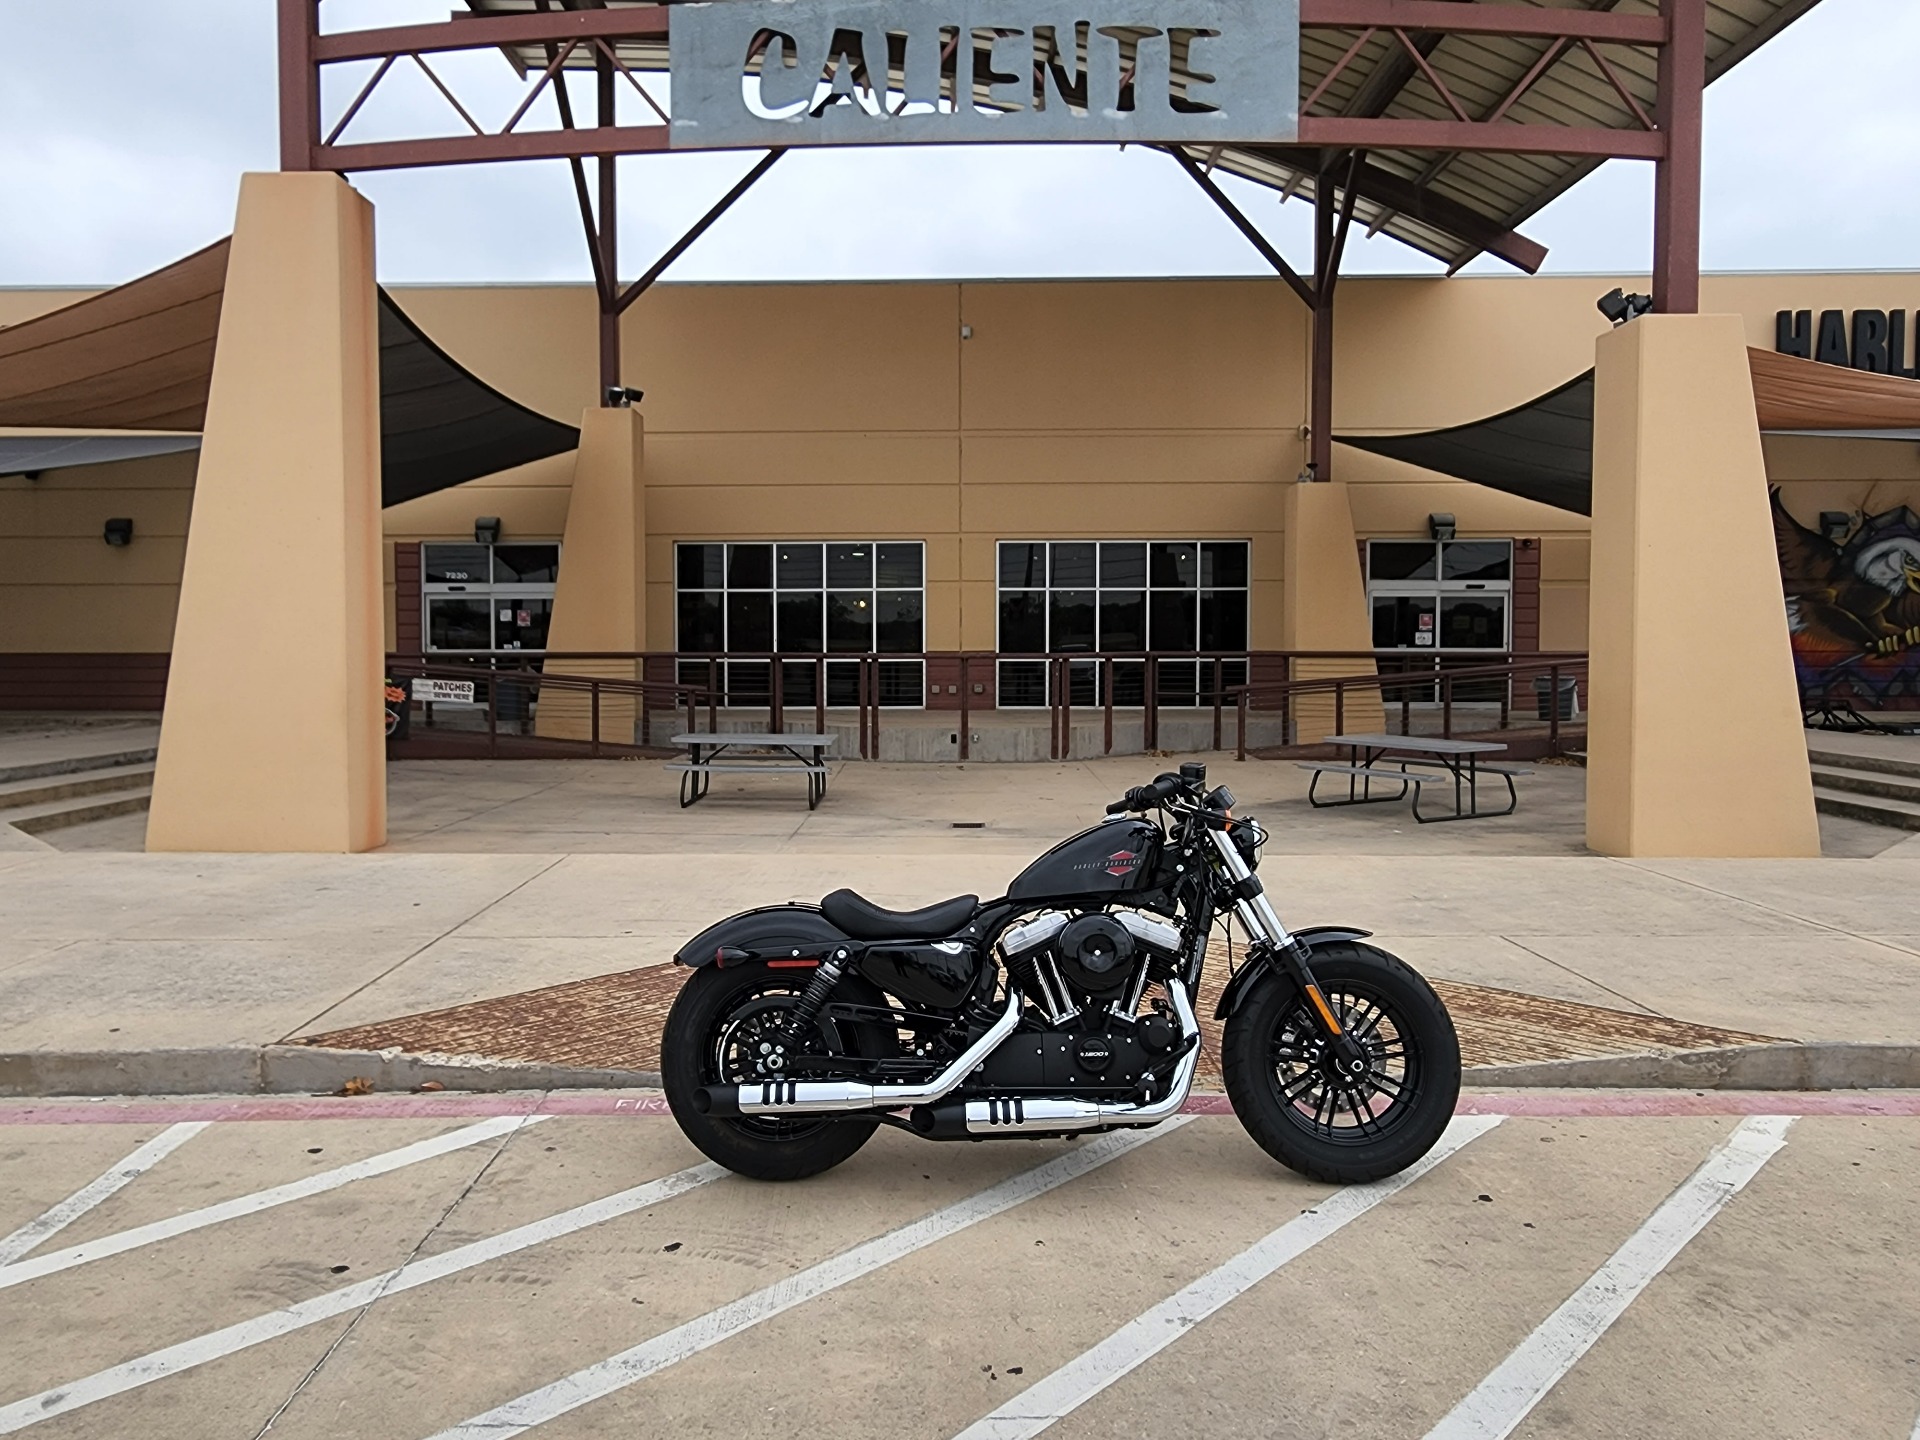 2022 Harley-Davidson Forty-Eight® in San Antonio, Texas - Photo 1